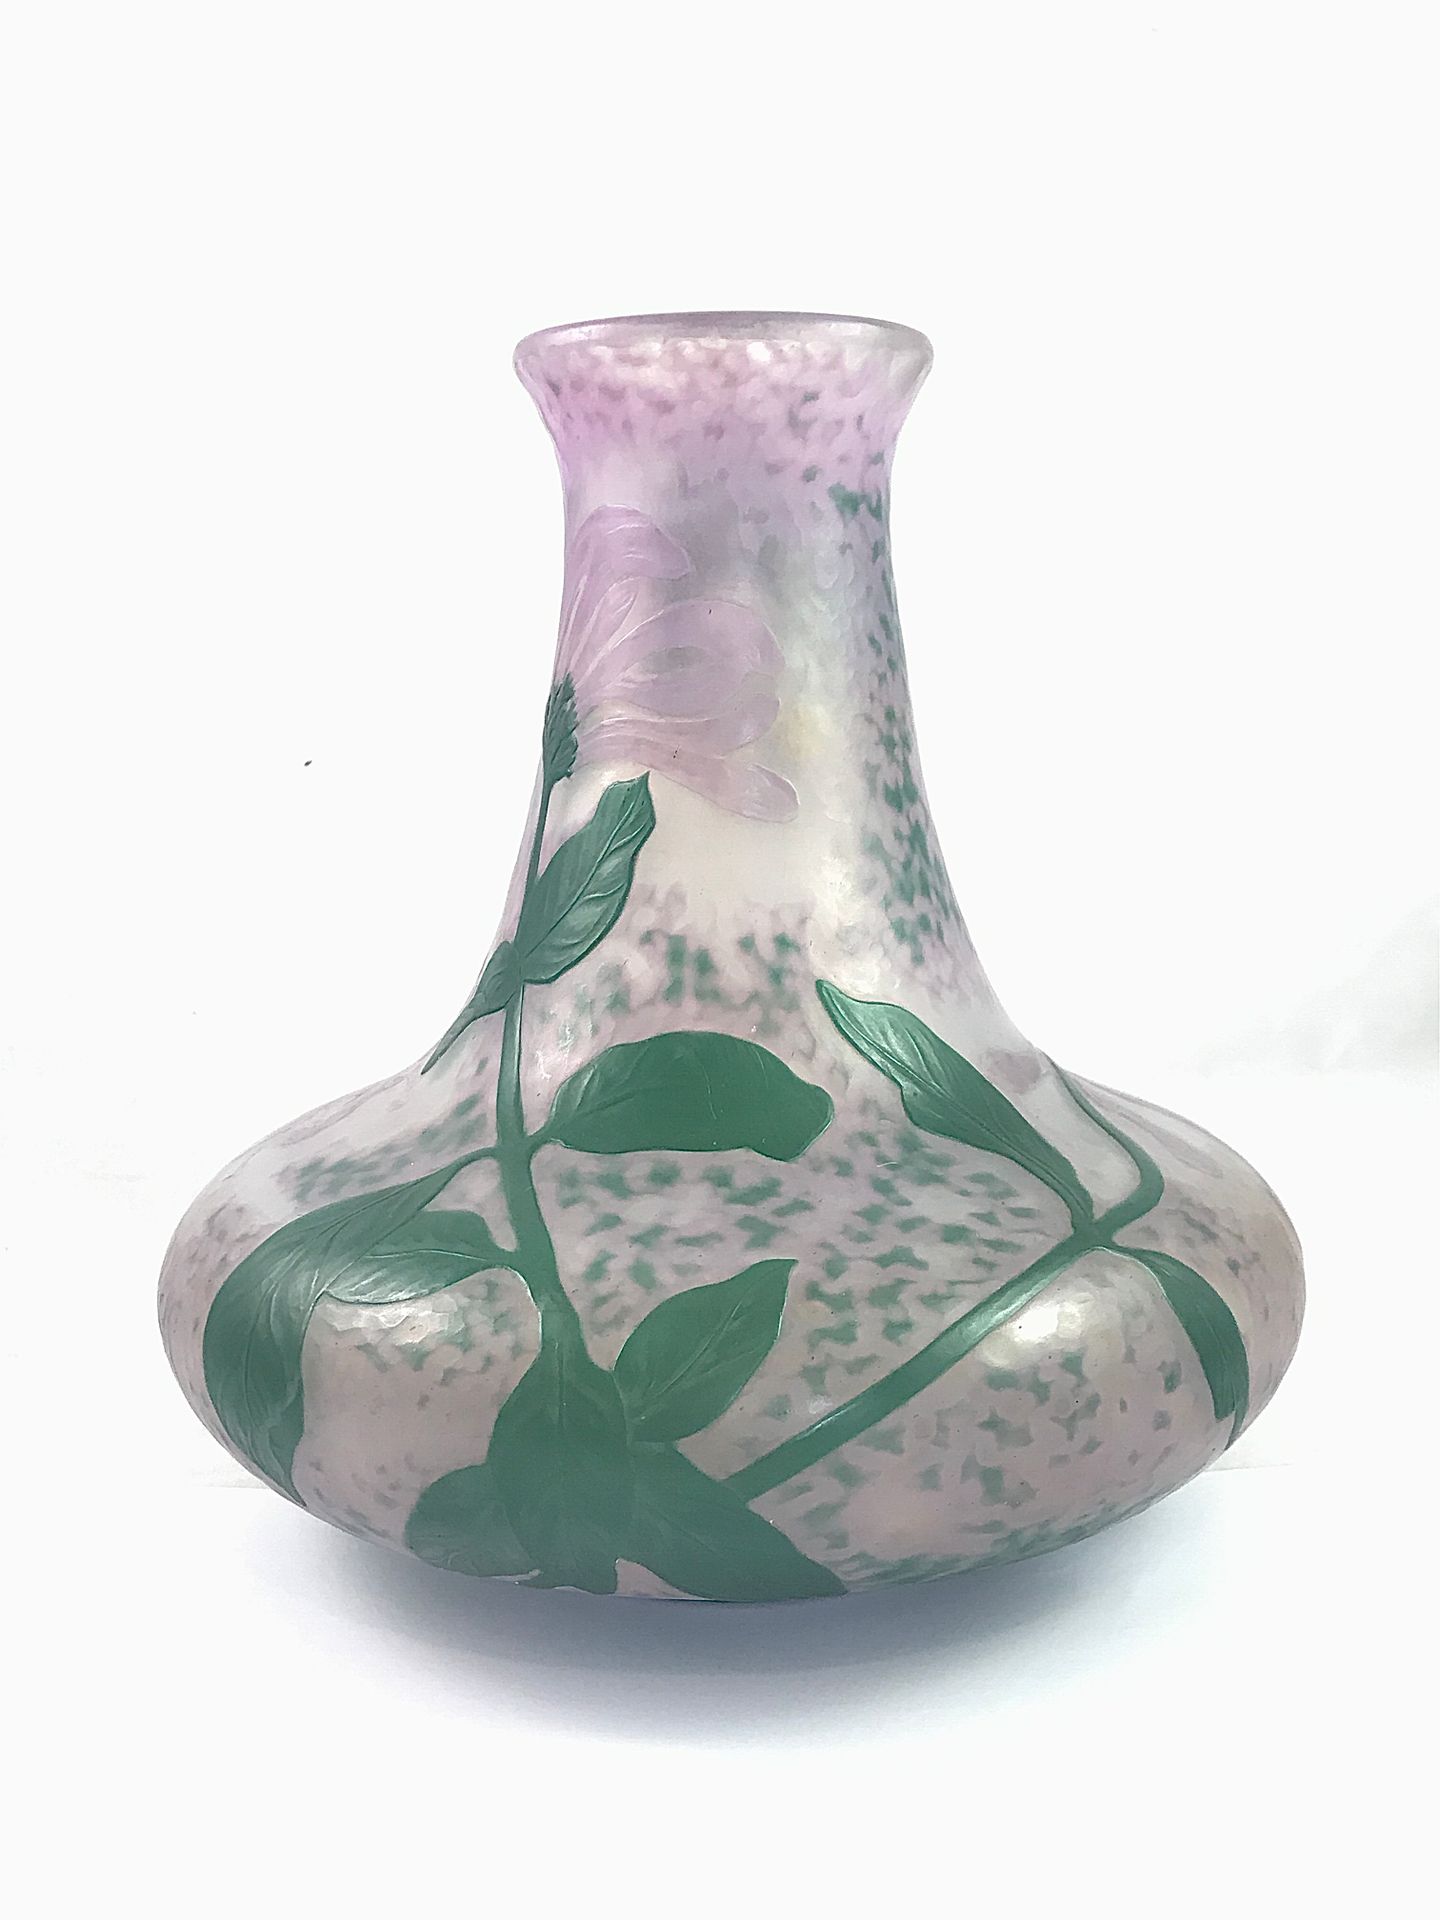 Null DAUM 南希

花瓶

吹制玻璃，内衬淡紫色和绿色，装饰有含苞待放和盛开的金银花，在锤击的背景上雕刻和浮雕。

底座上有 "Daum Nancy "&hellip;